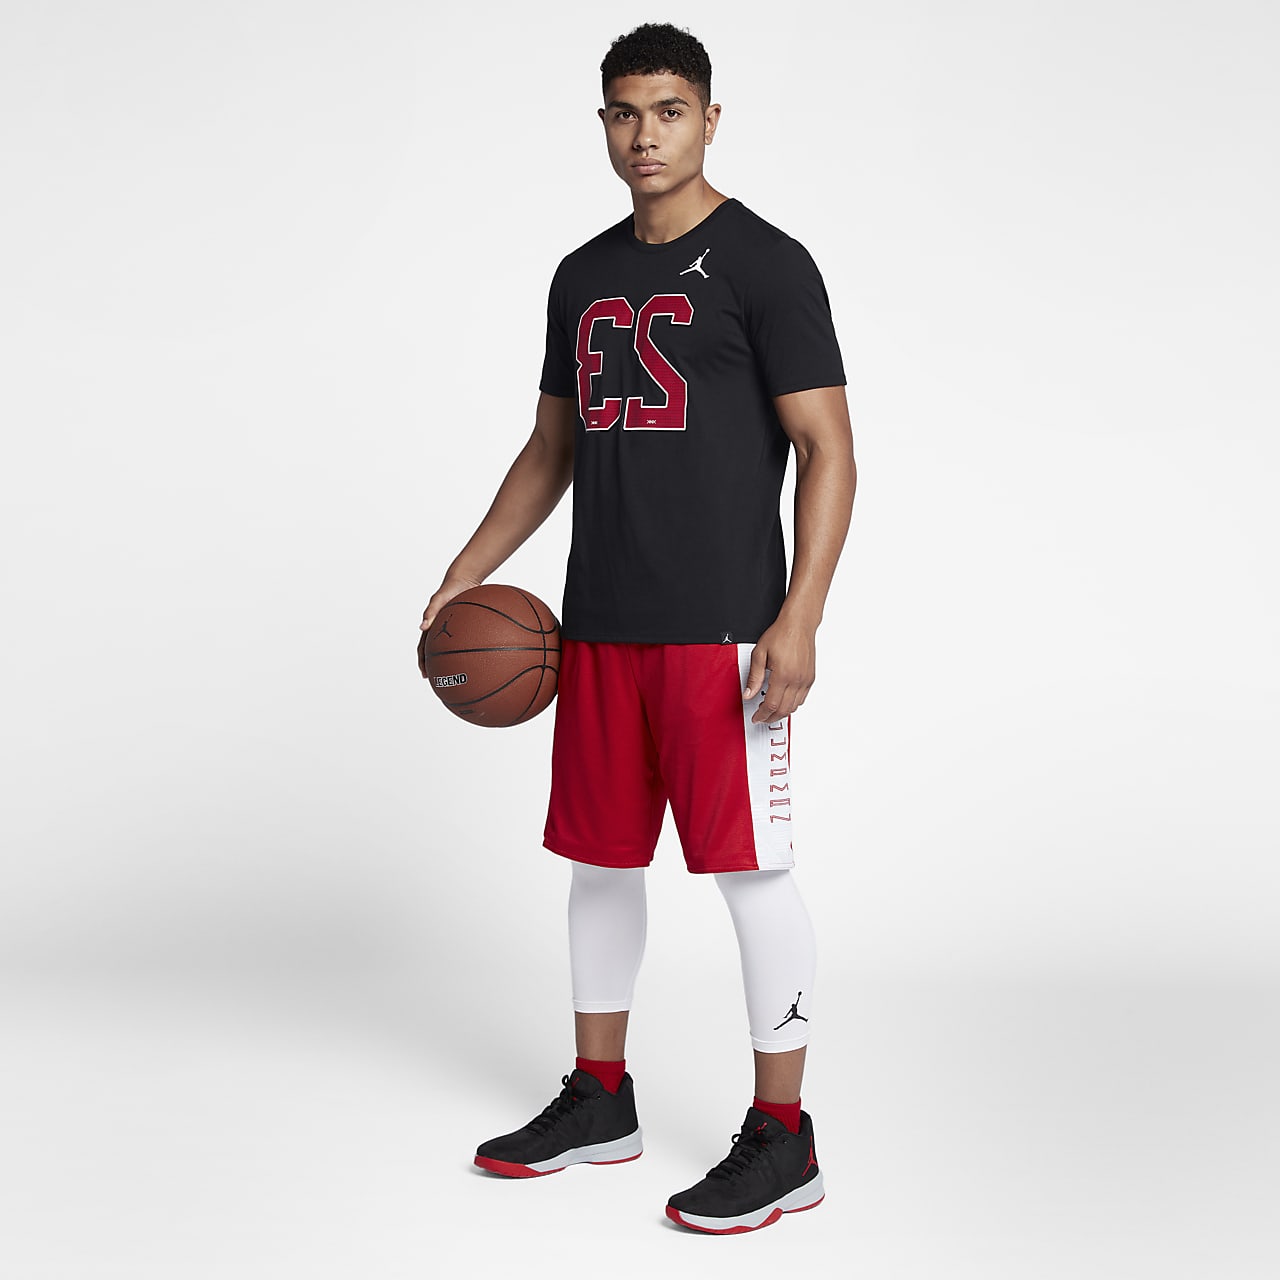 Jordan 23 Men's Basketball T-Shirt. ID